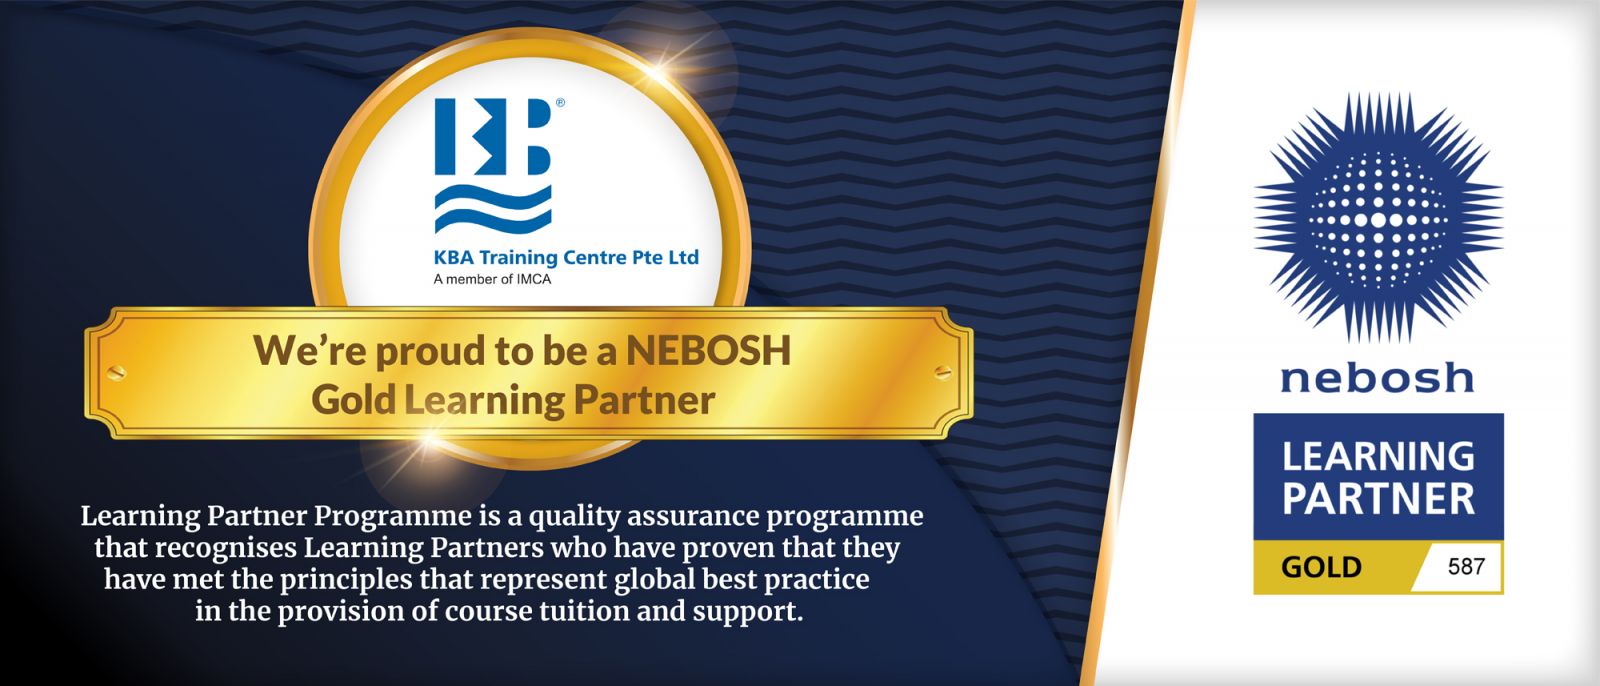 KBAT has achieved GOLD Status in NEBOSH Learning Partner Programme